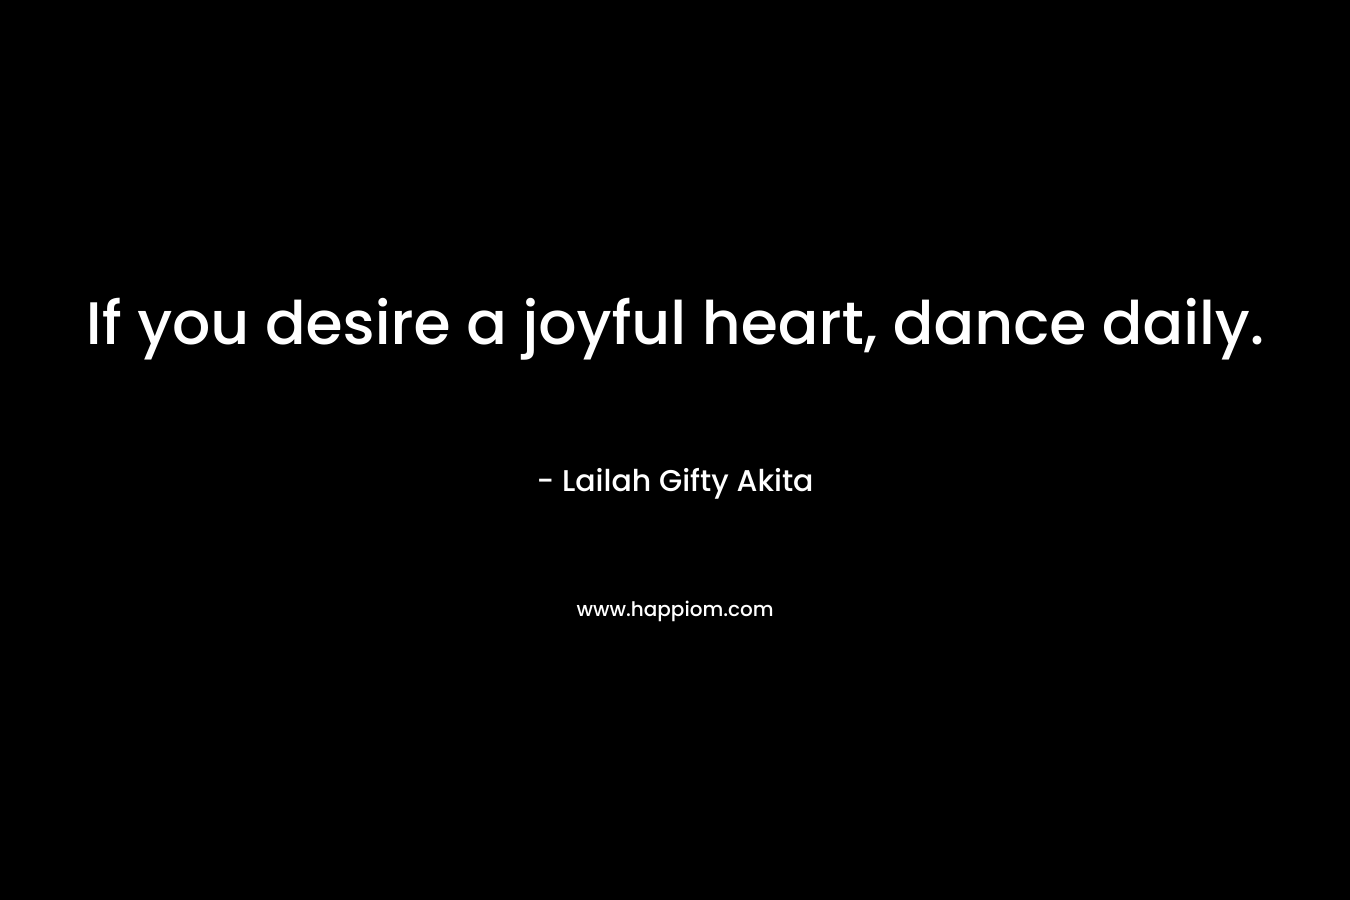 If you desire a joyful heart, dance daily.